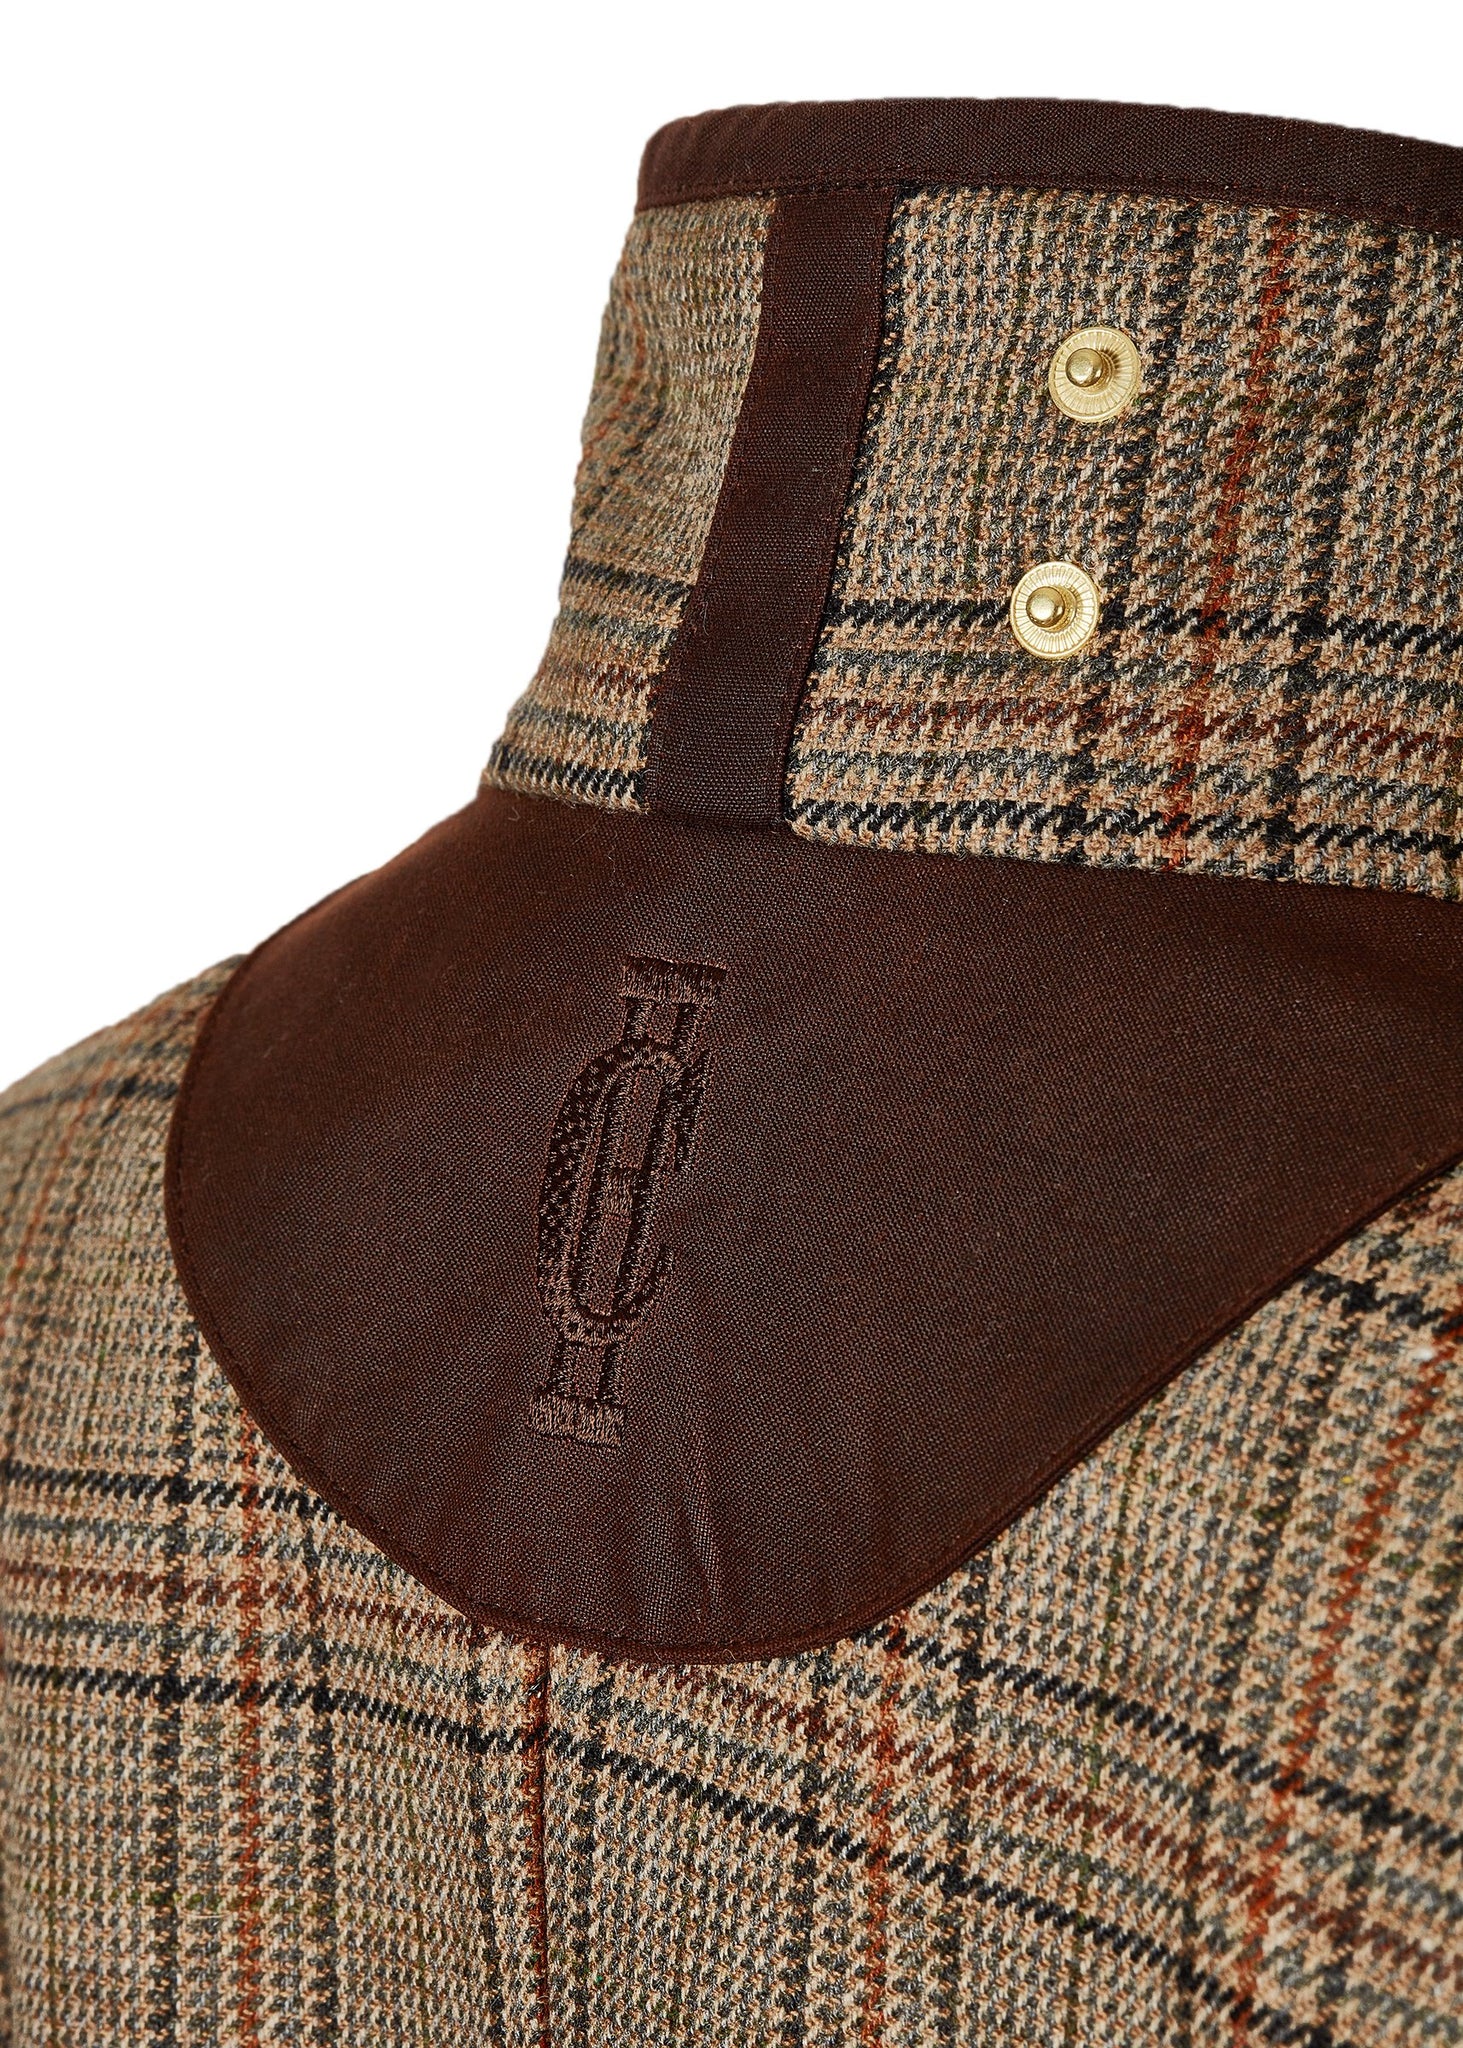 Collar of womans brown tartan tweed field coat